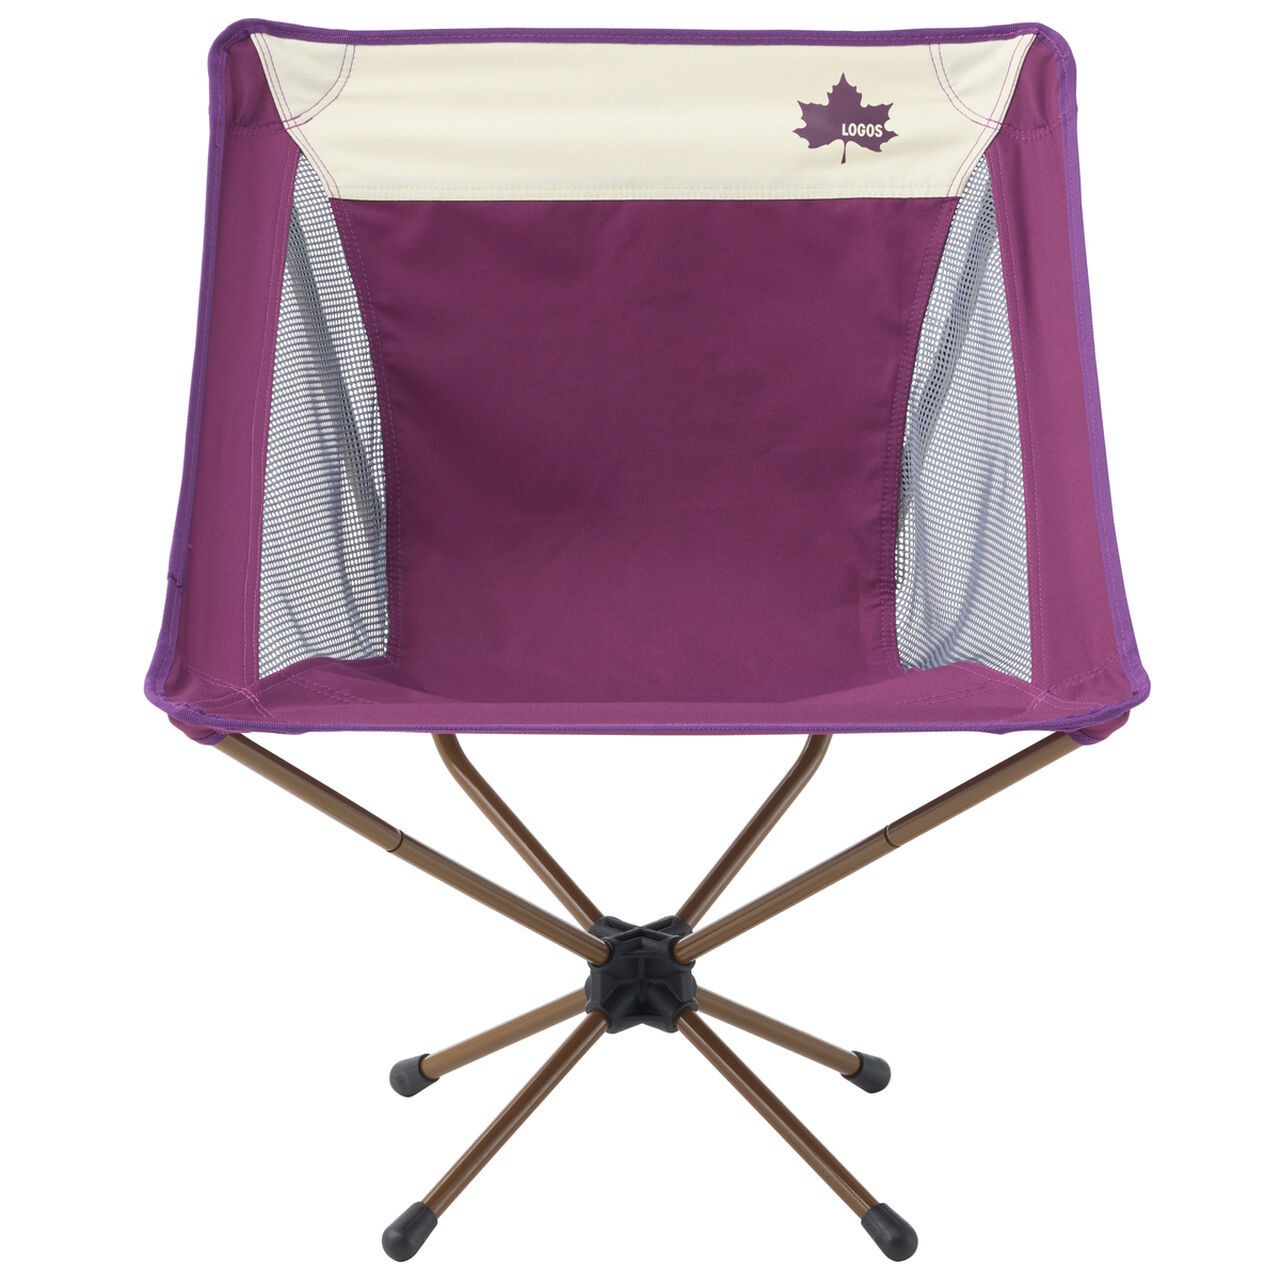 LOGOS Life Bucket Chair (Colorful Logos),Purple, large image number 4